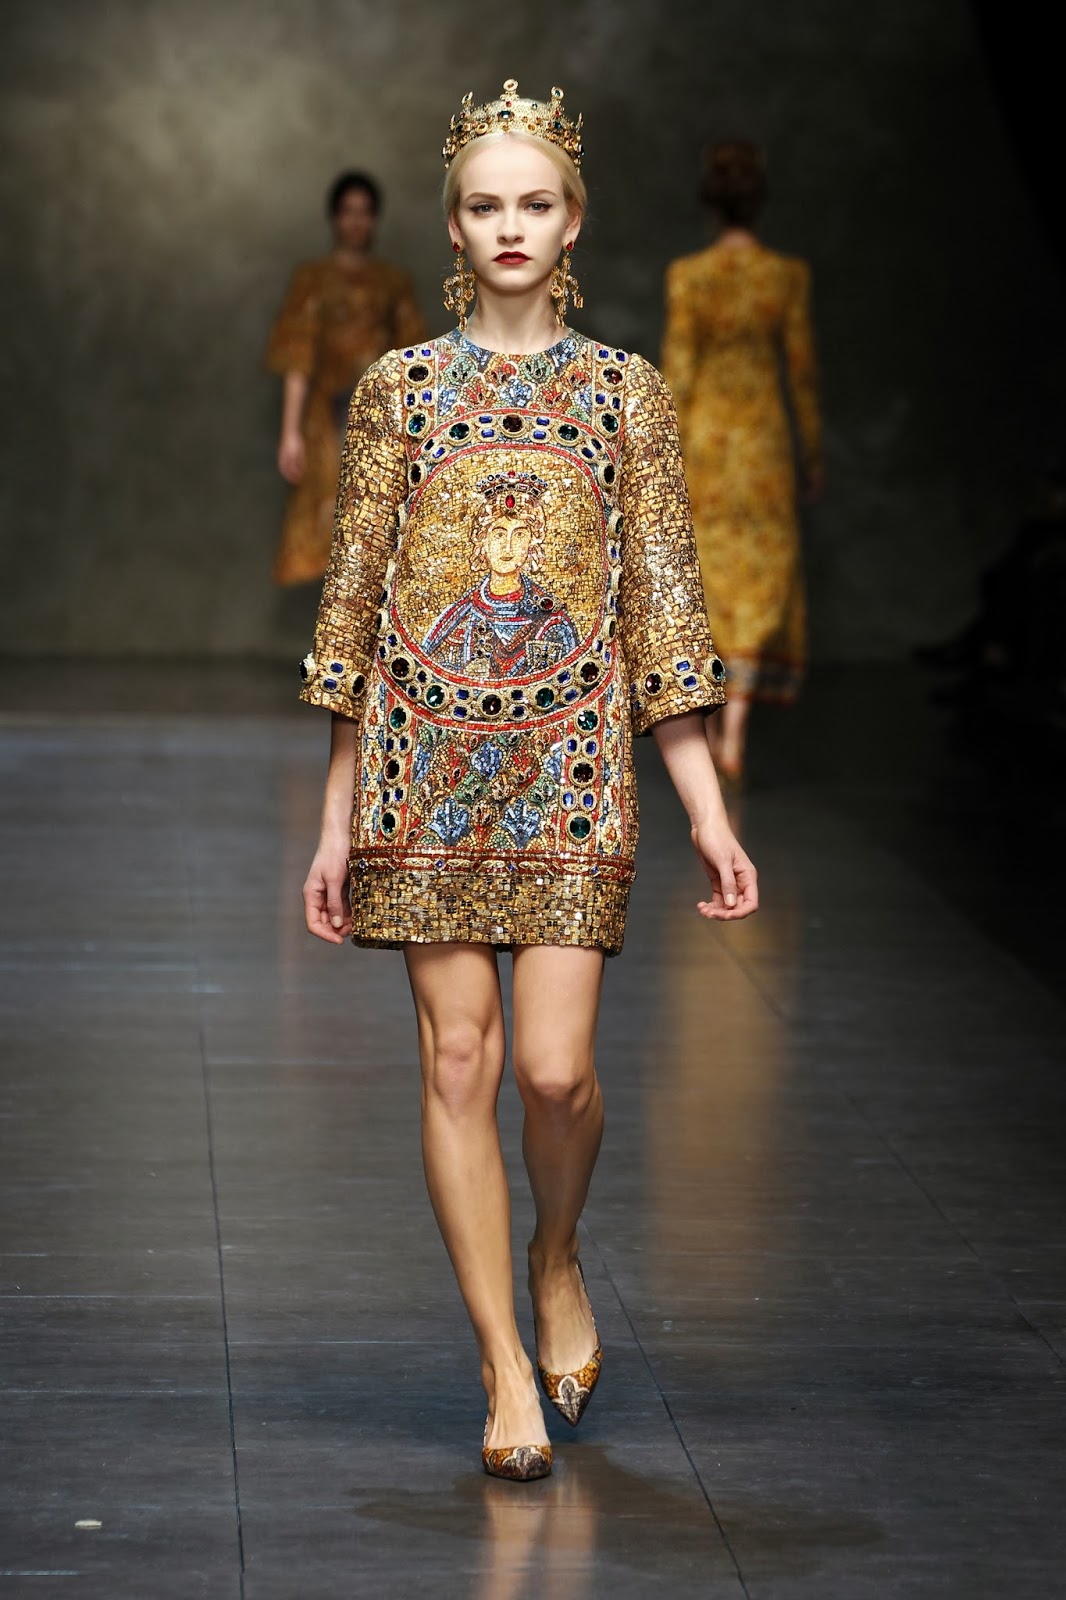 Multimayway: Dolce & Gabbana in Renaissance